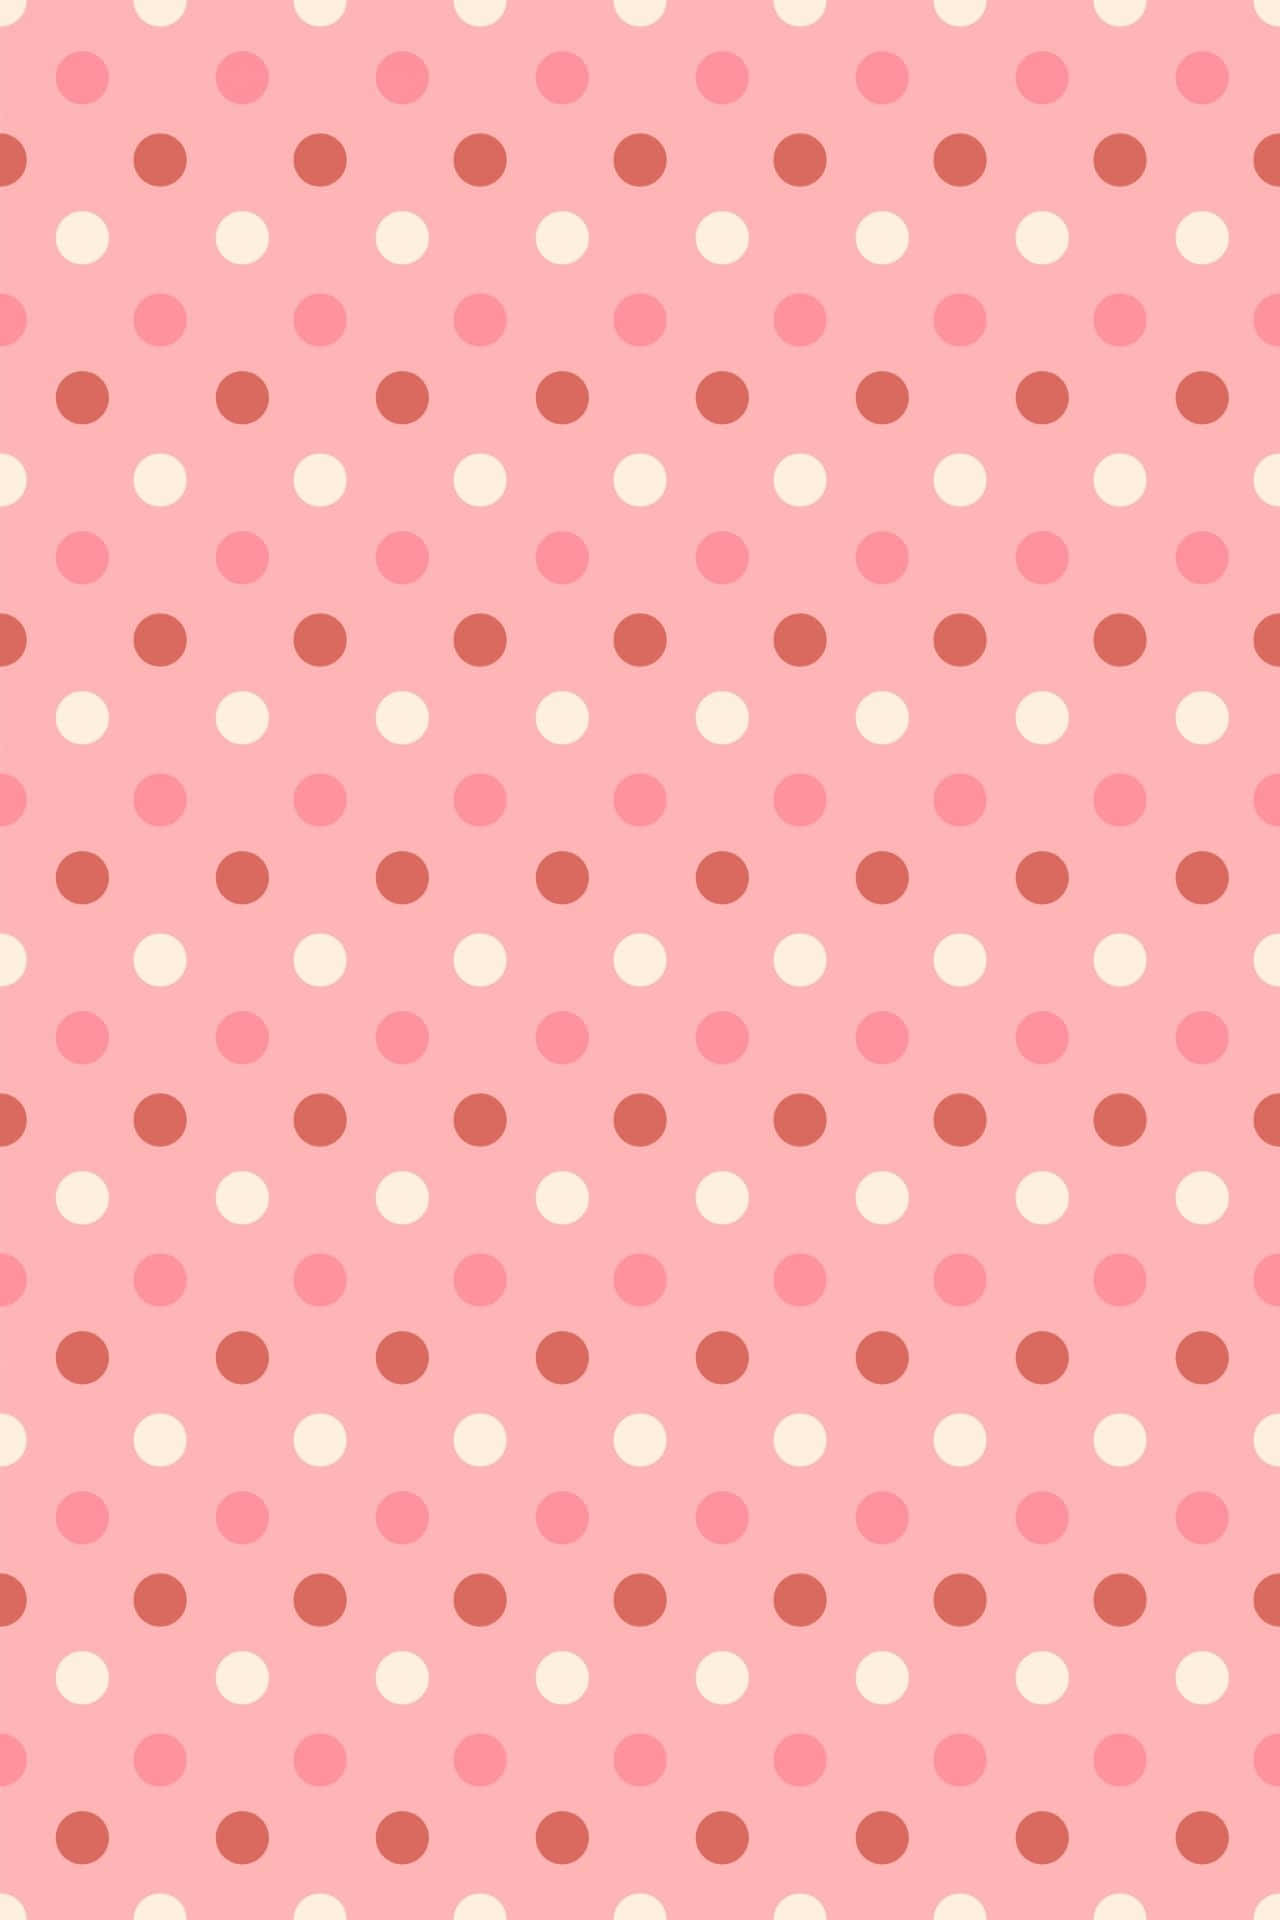 Captivating Pink And White Polka Dot Design Wallpaper